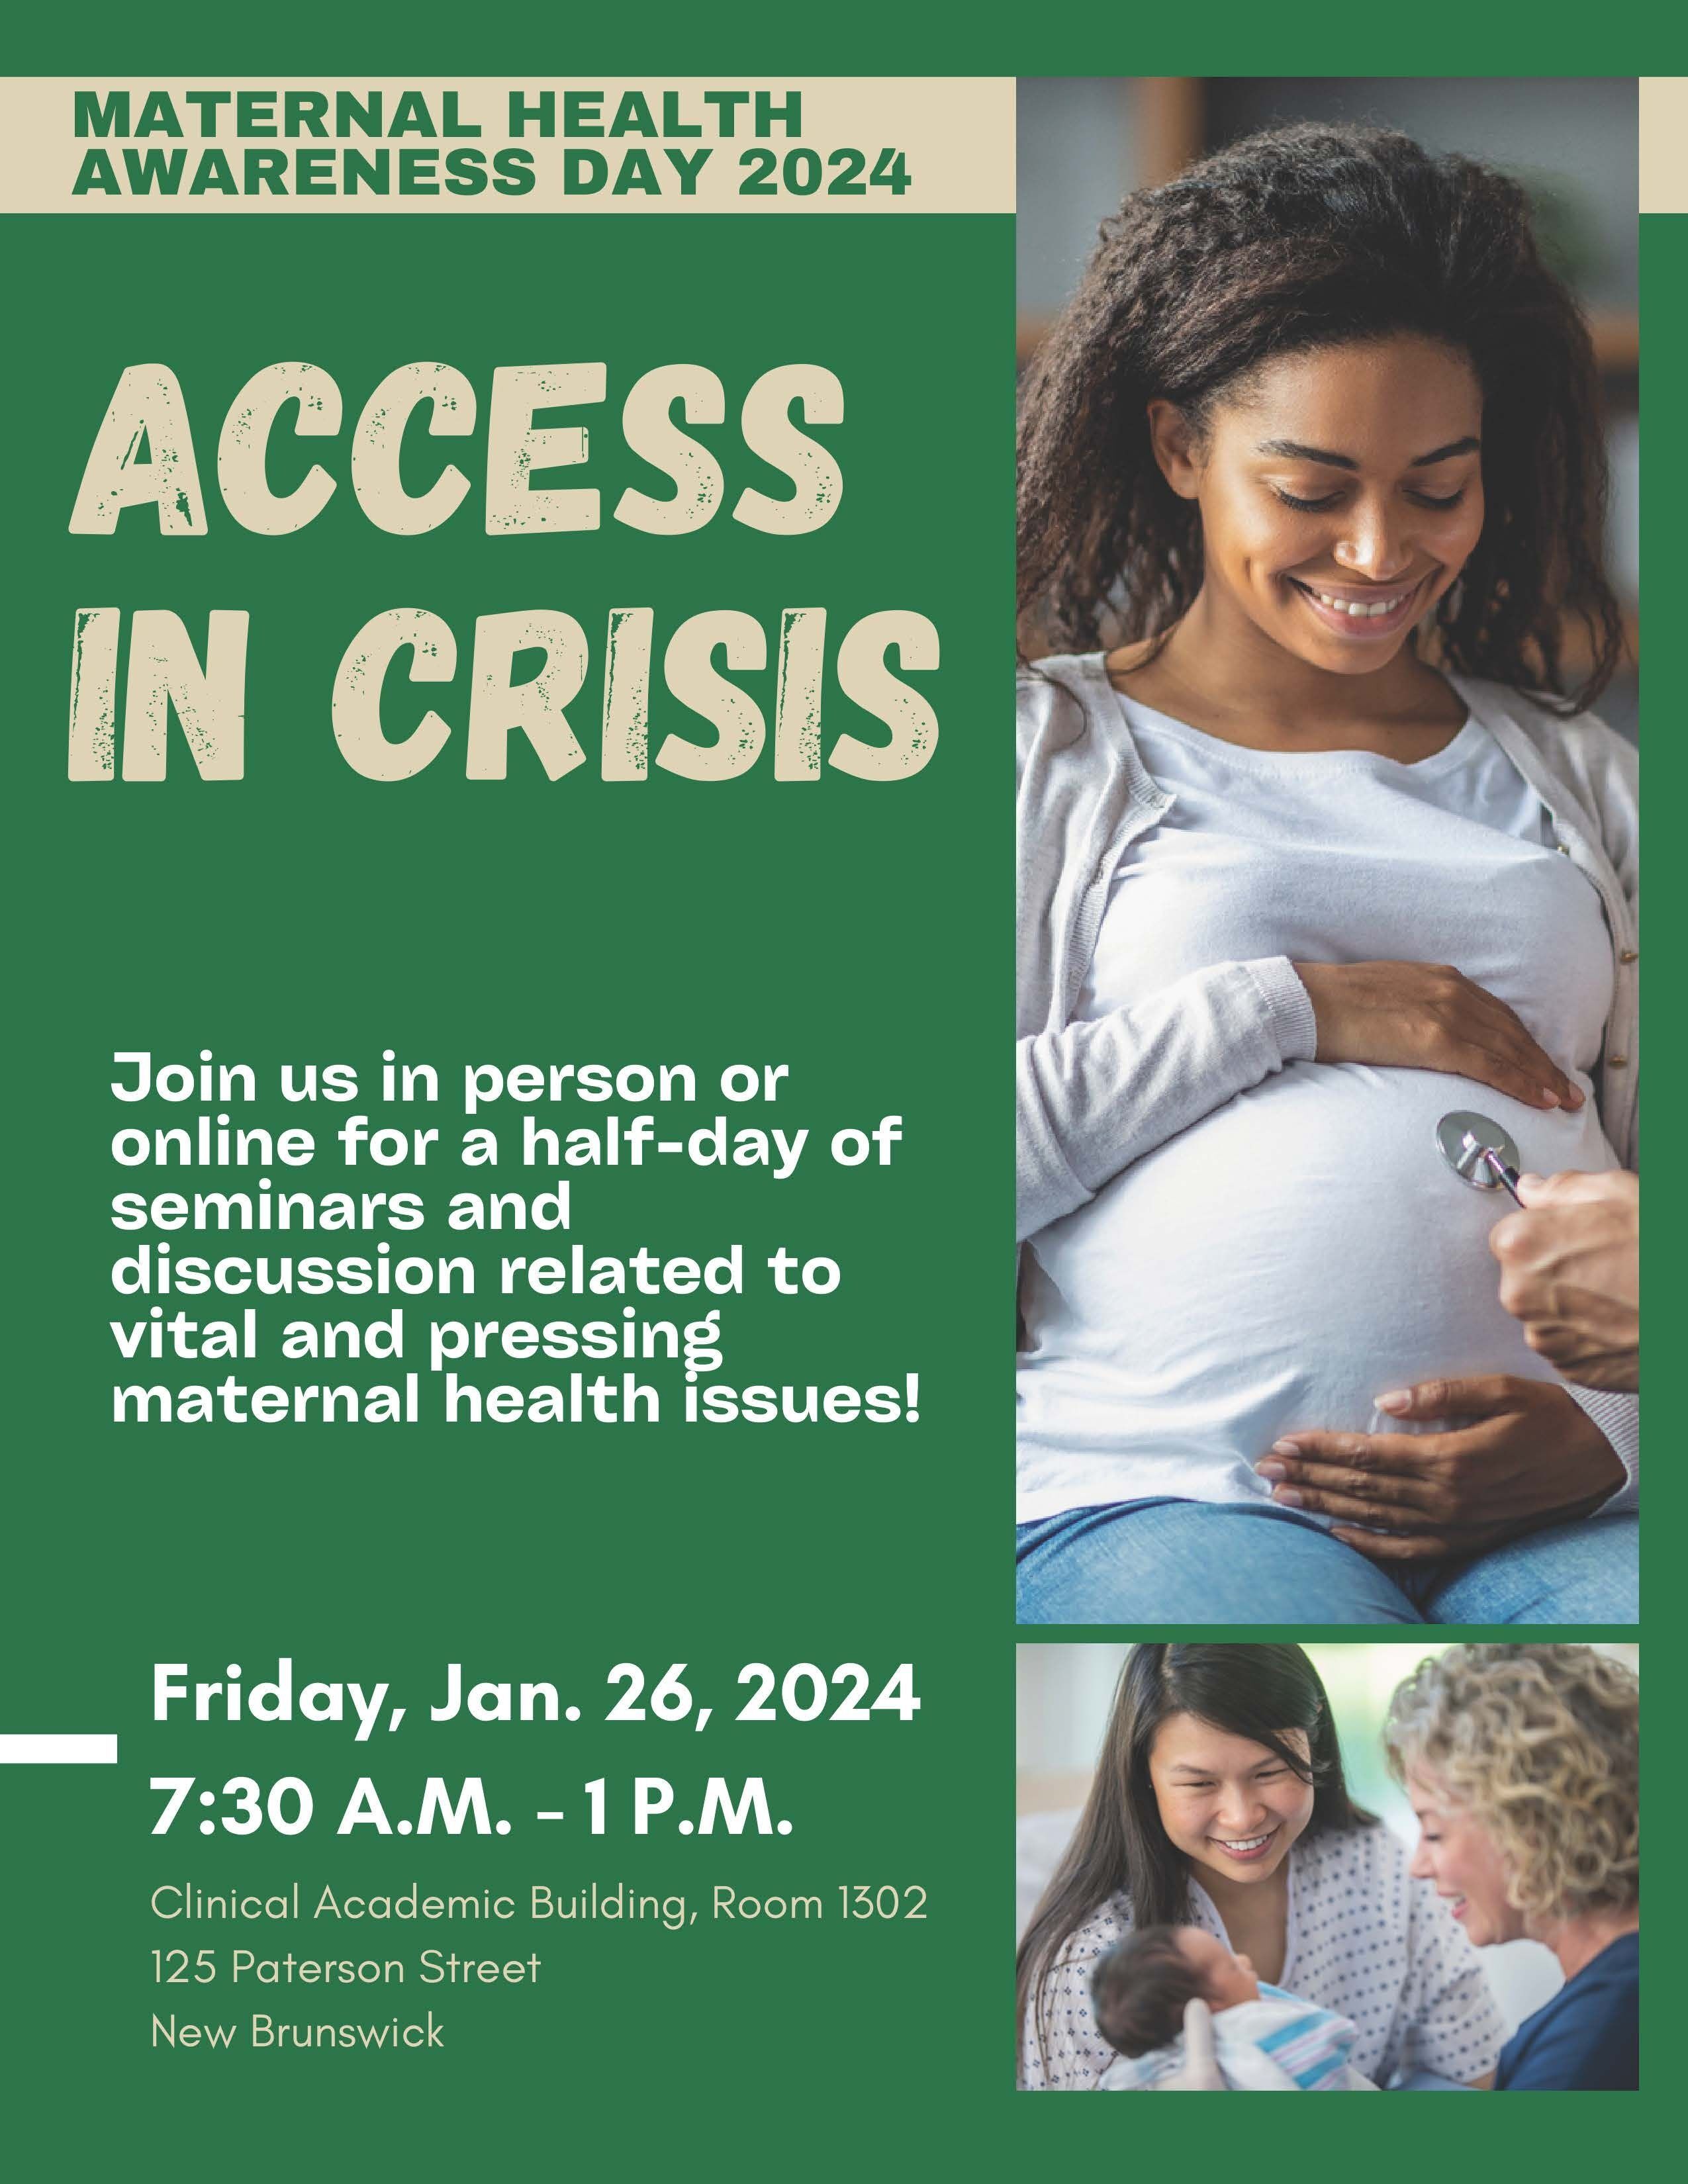 Access in Crisis: Maternal Health Awareness Day 2024